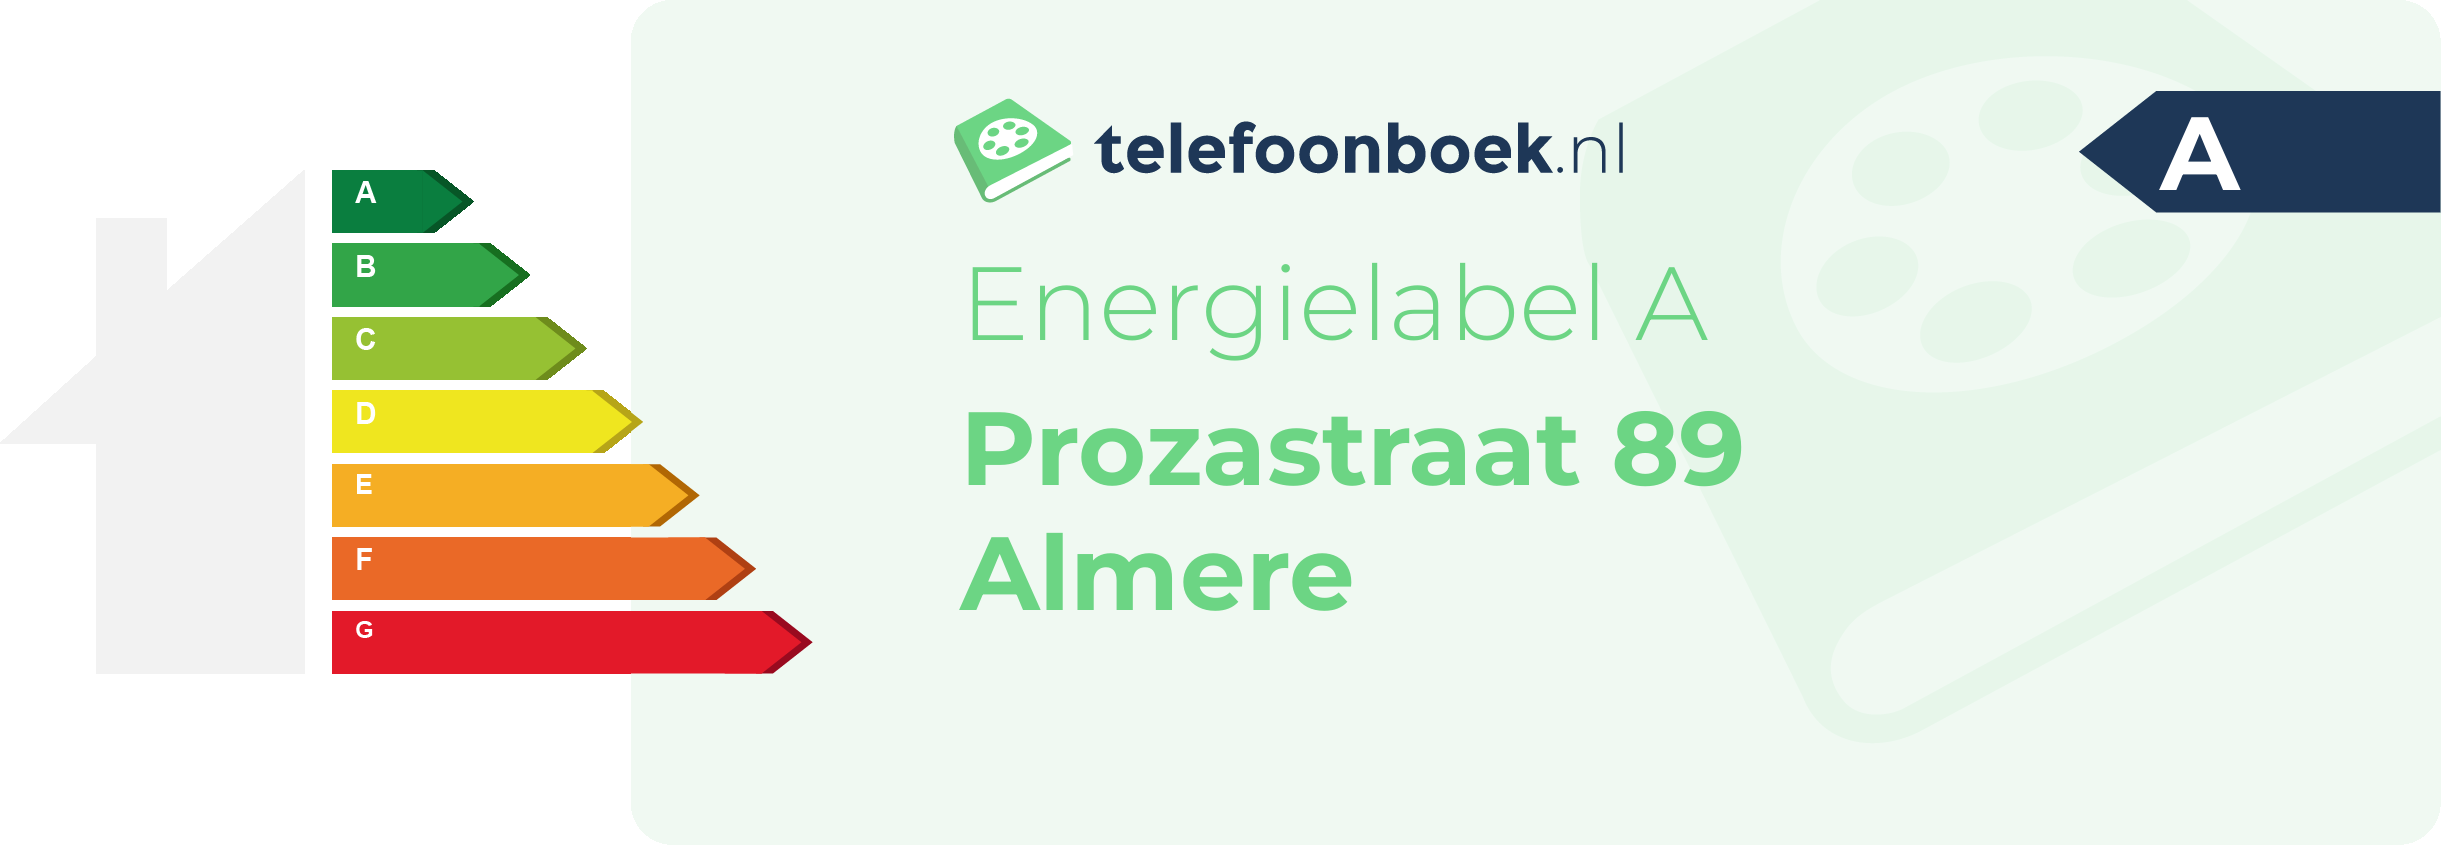 Energielabel Prozastraat 89 Almere